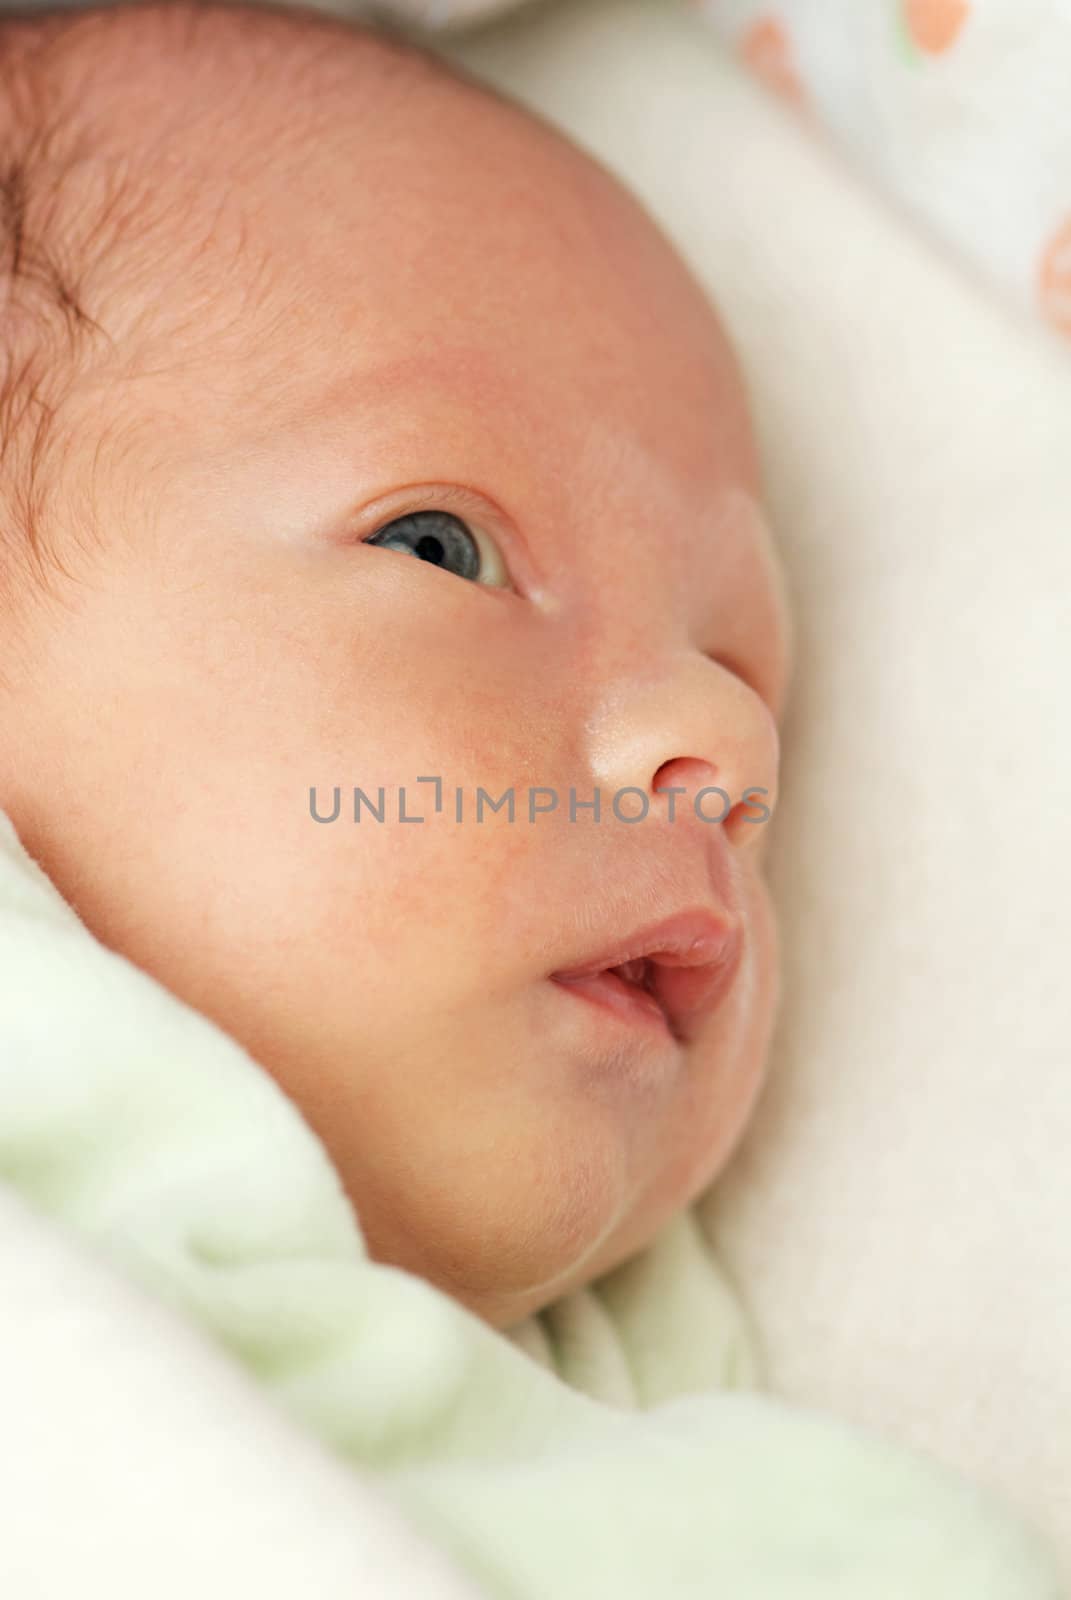 Portrait of newborn close-up